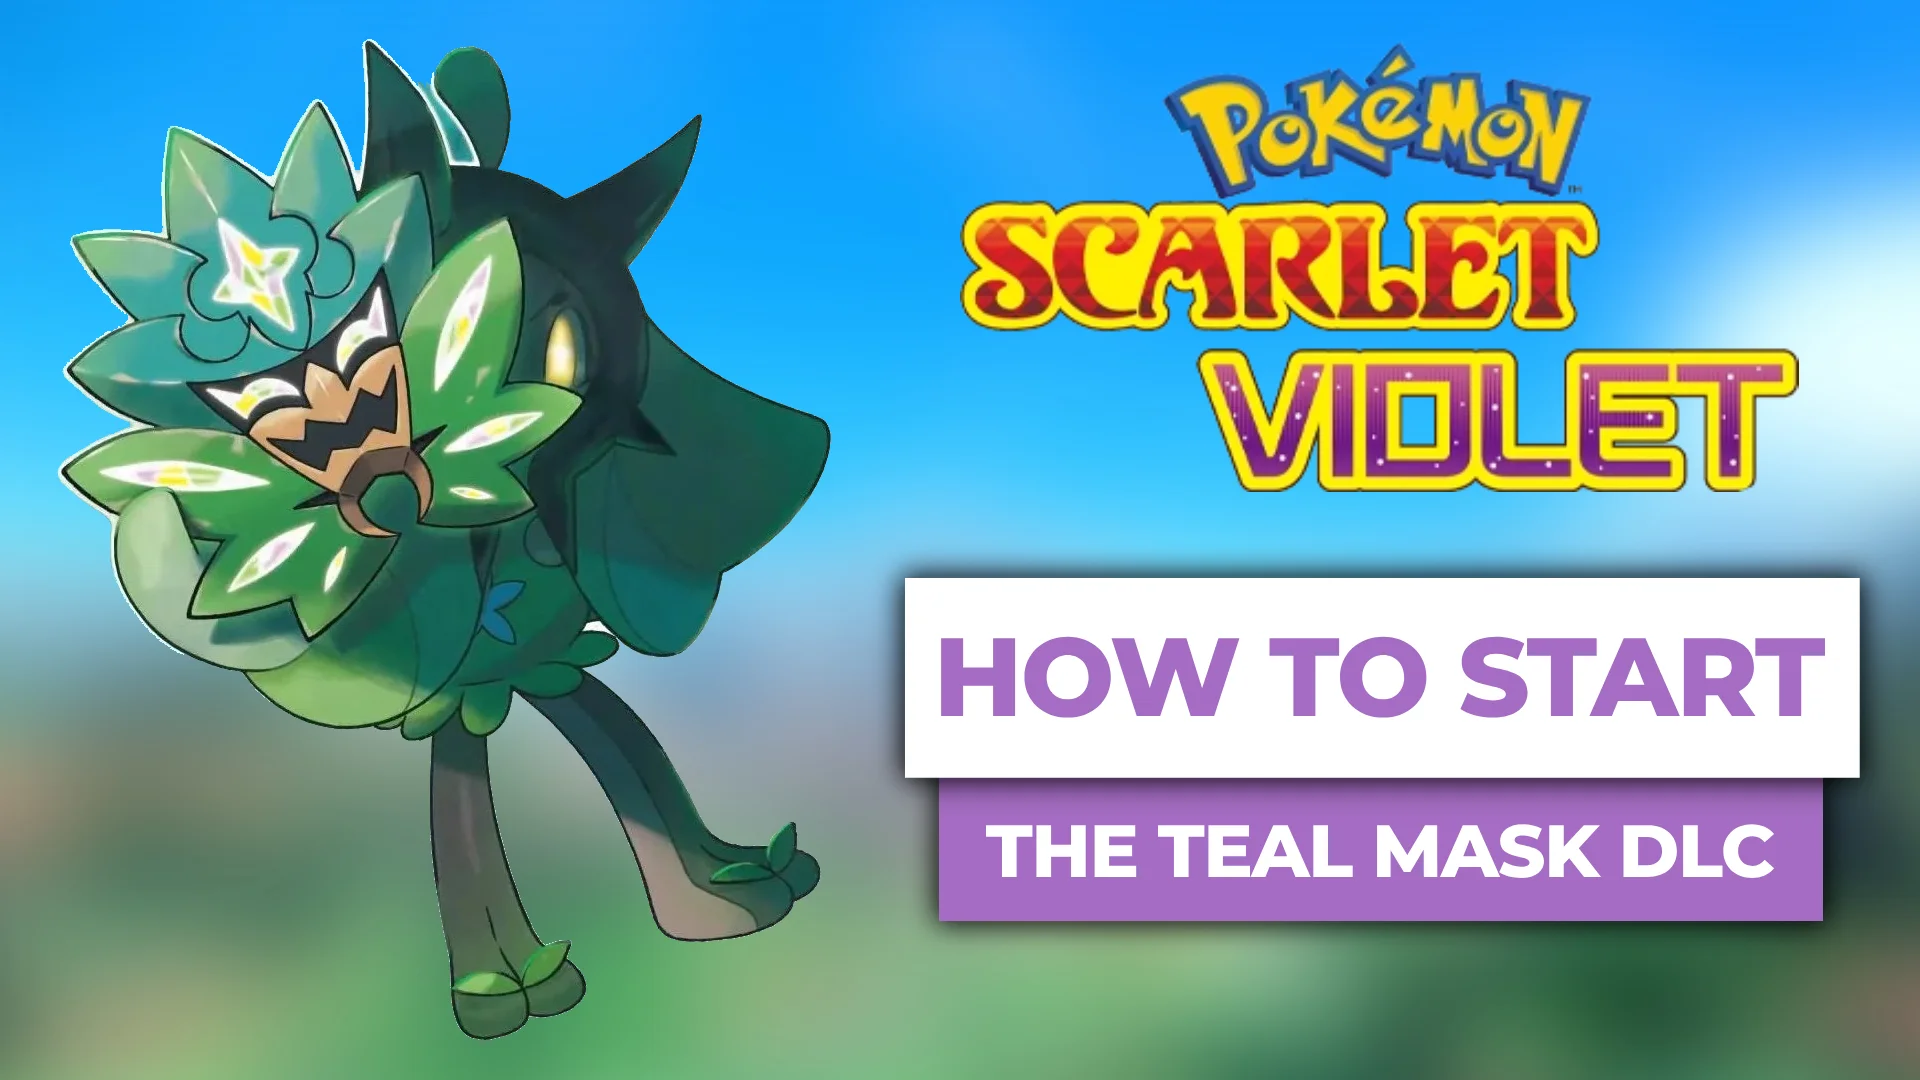 How to Start The Teal Mask DLC For Pokemon Scarlet & Violet